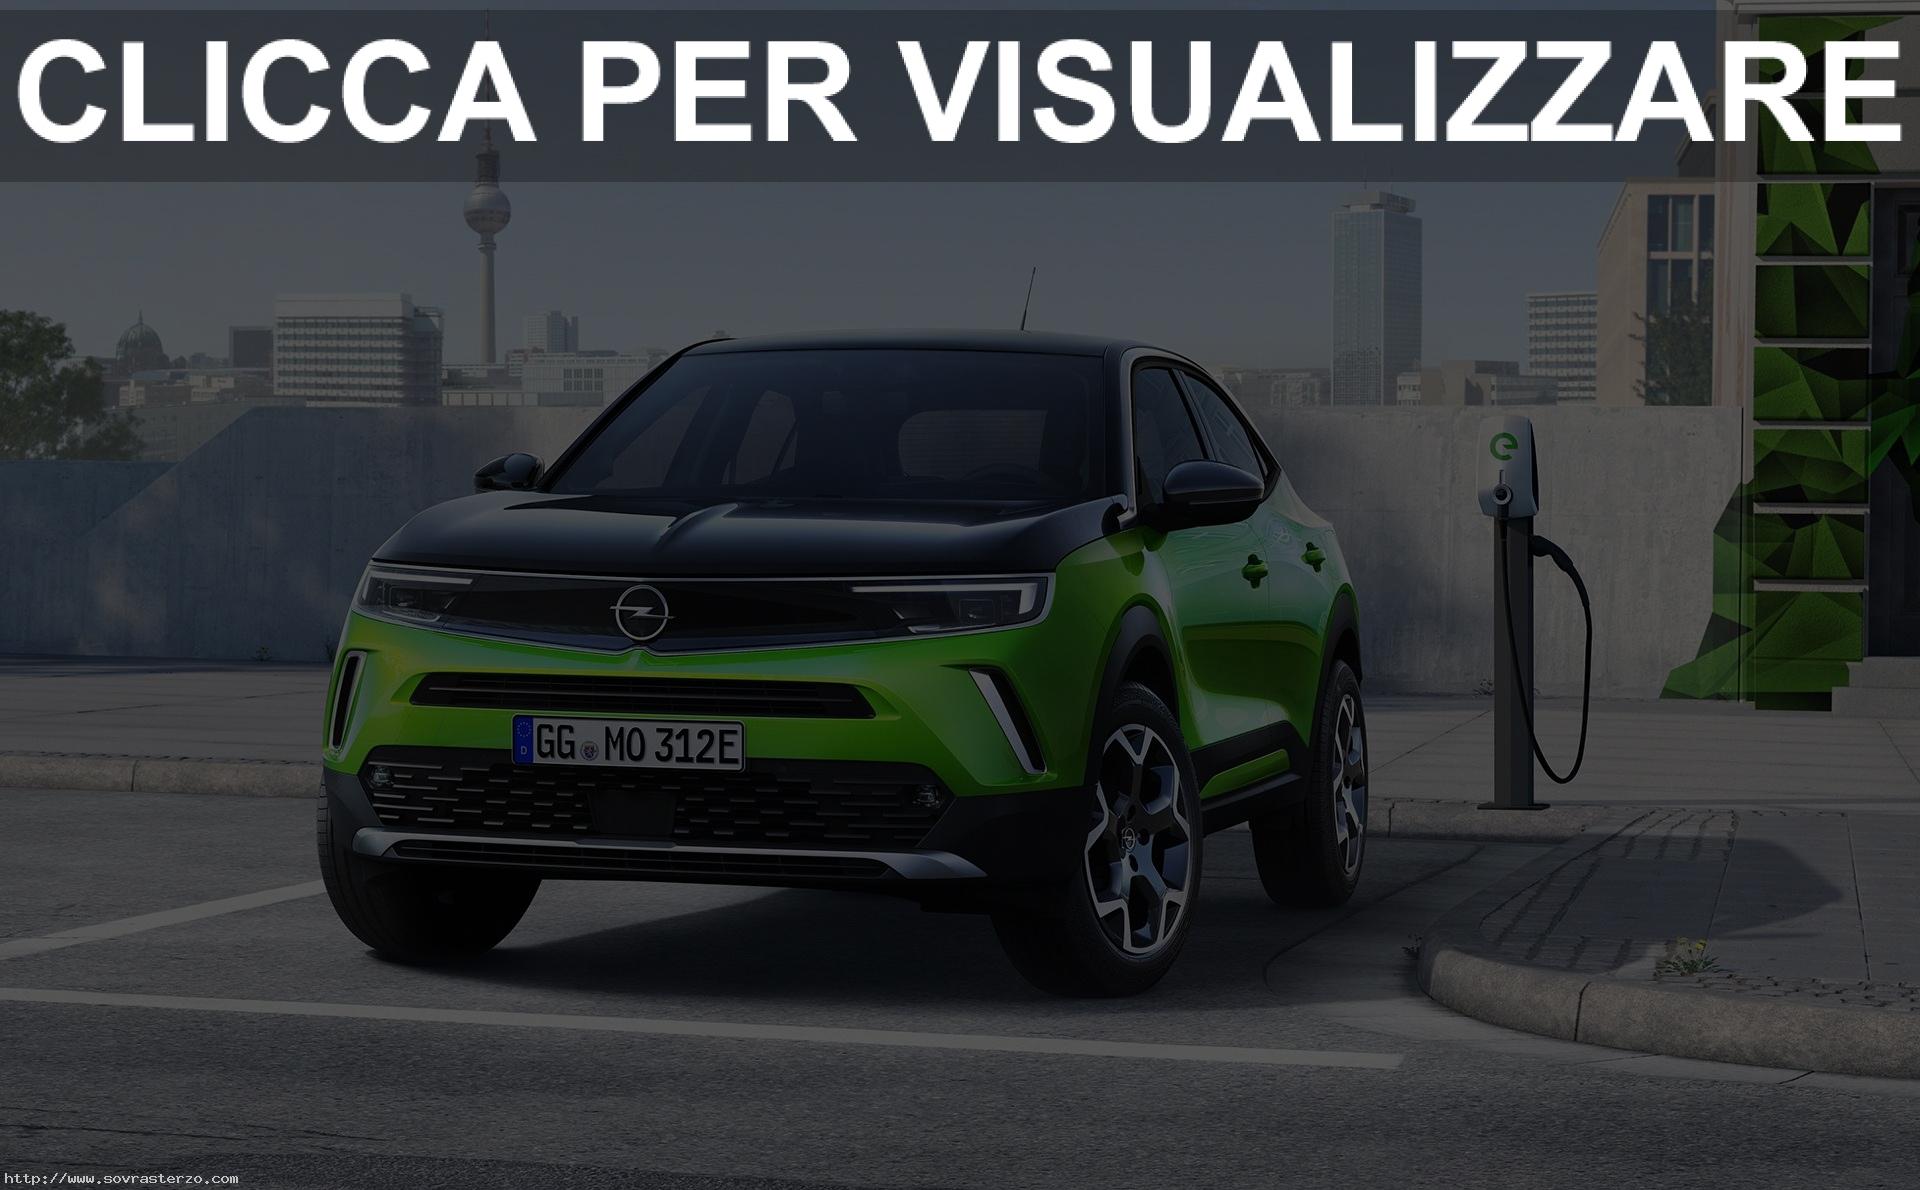 Nuova Opel Mokka 2021 anche Elettrica - Sovrasterzo